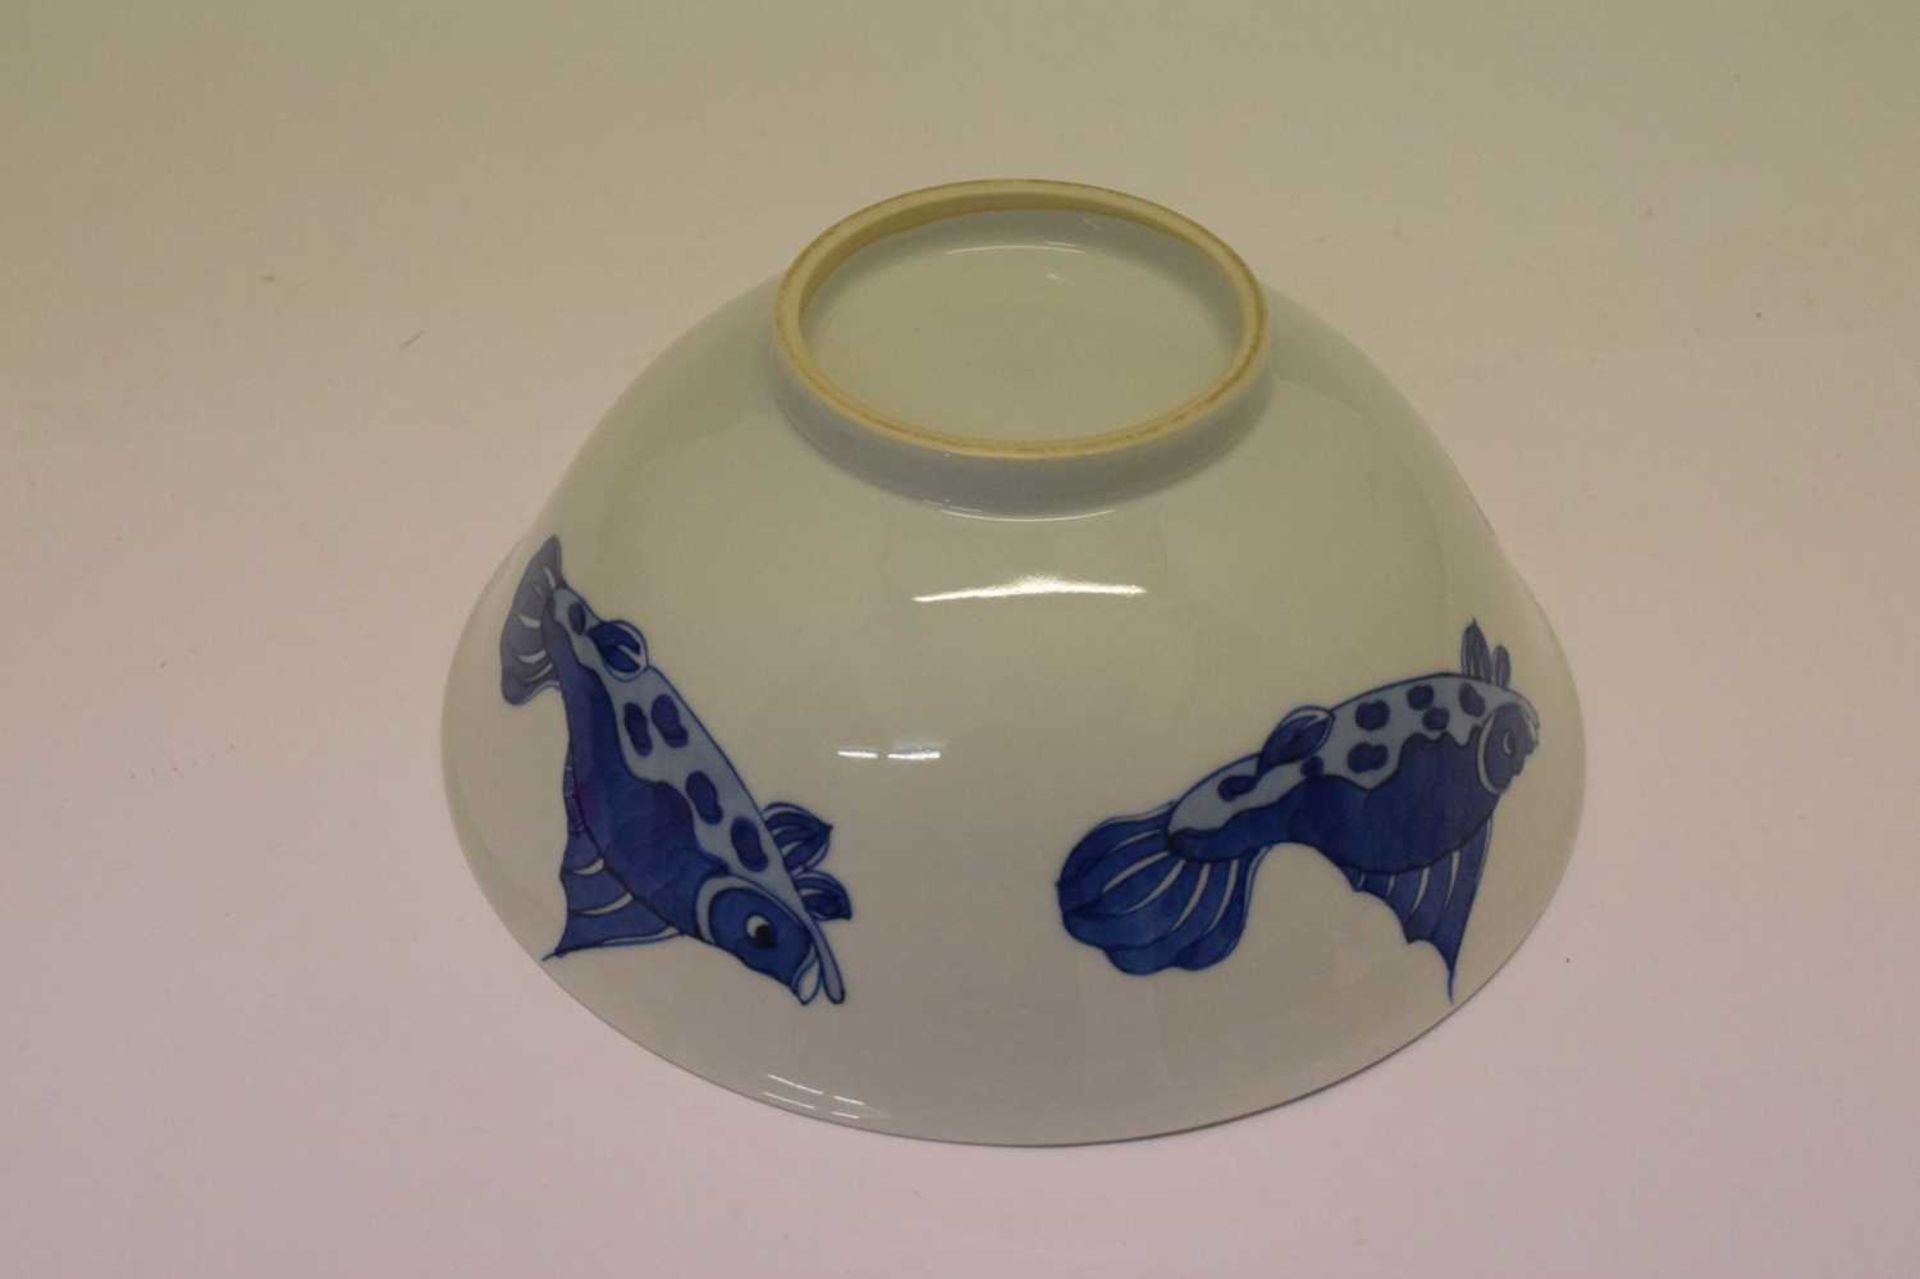 K'ang Hsi style porcelain bowl - Image 5 of 7